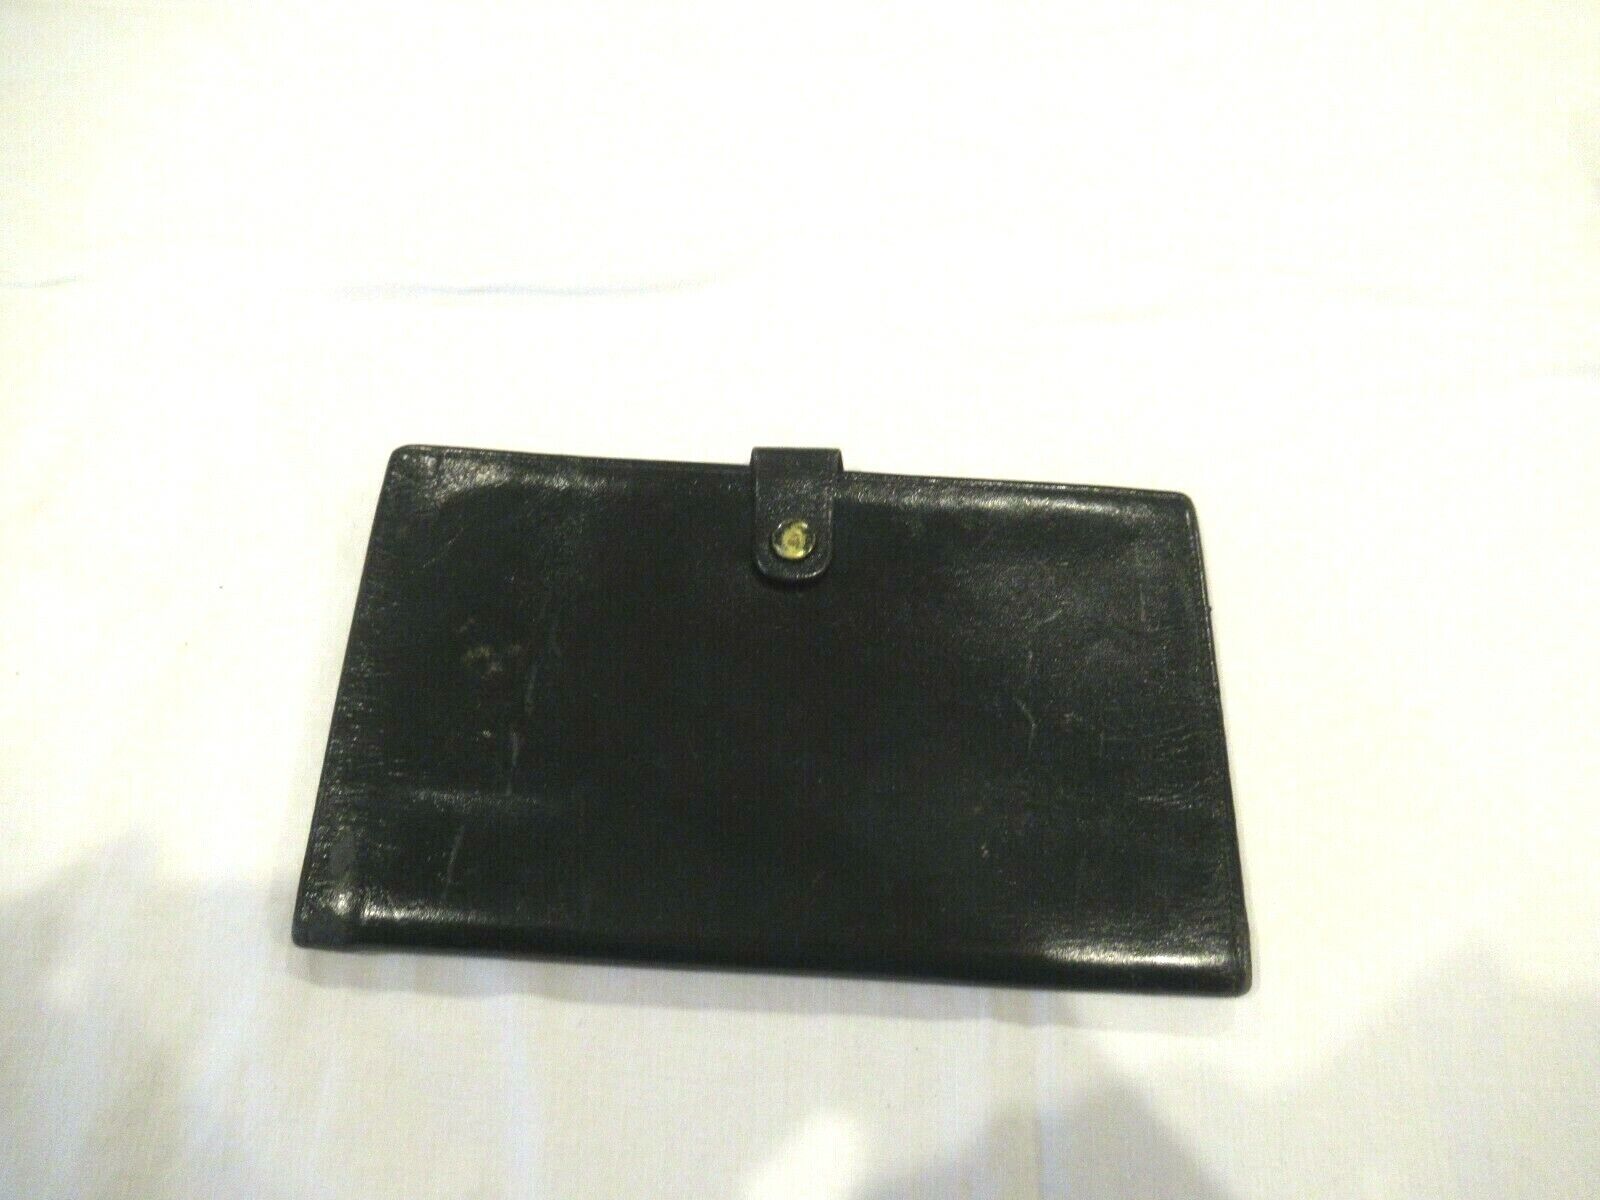 Artamount black leather travel wallet, vintage 1960s